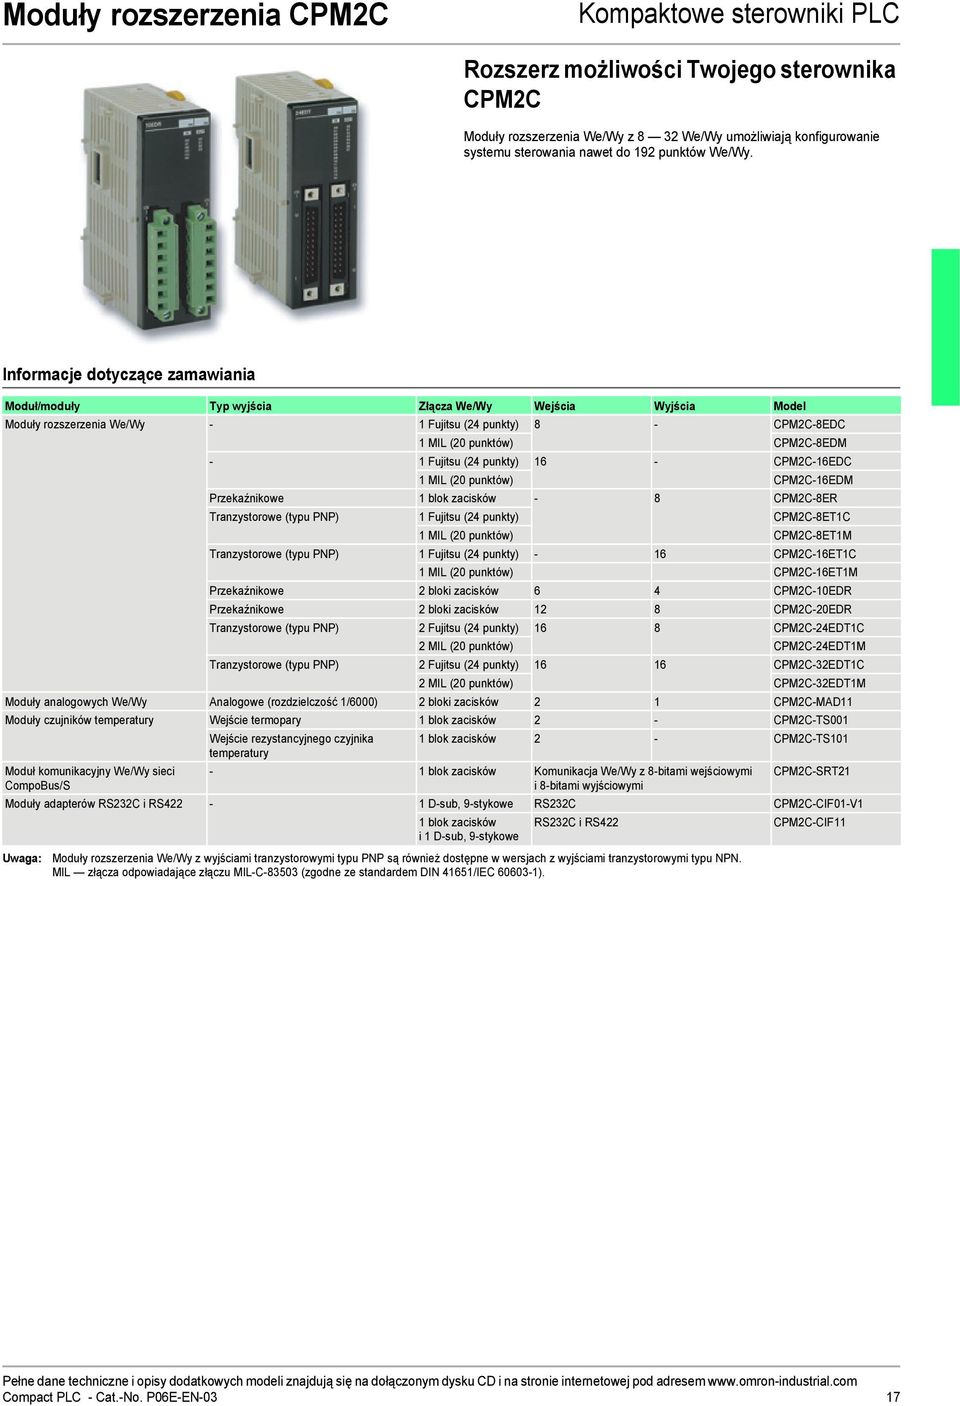 CPM2C-16EDM Przekaźnikowe 1 blok zacisków - 8 CPM2C-8ER 1 Fujitsu (24 punkty) CPM2C-8ET1C 1 MIL (20 ) CPM2C-8ET1M 1 Fujitsu (24 punkty) - 16 CPM2C-16ET1C 1 MIL (20 ) CPM2C-16ET1M Przekaźnikowe 2